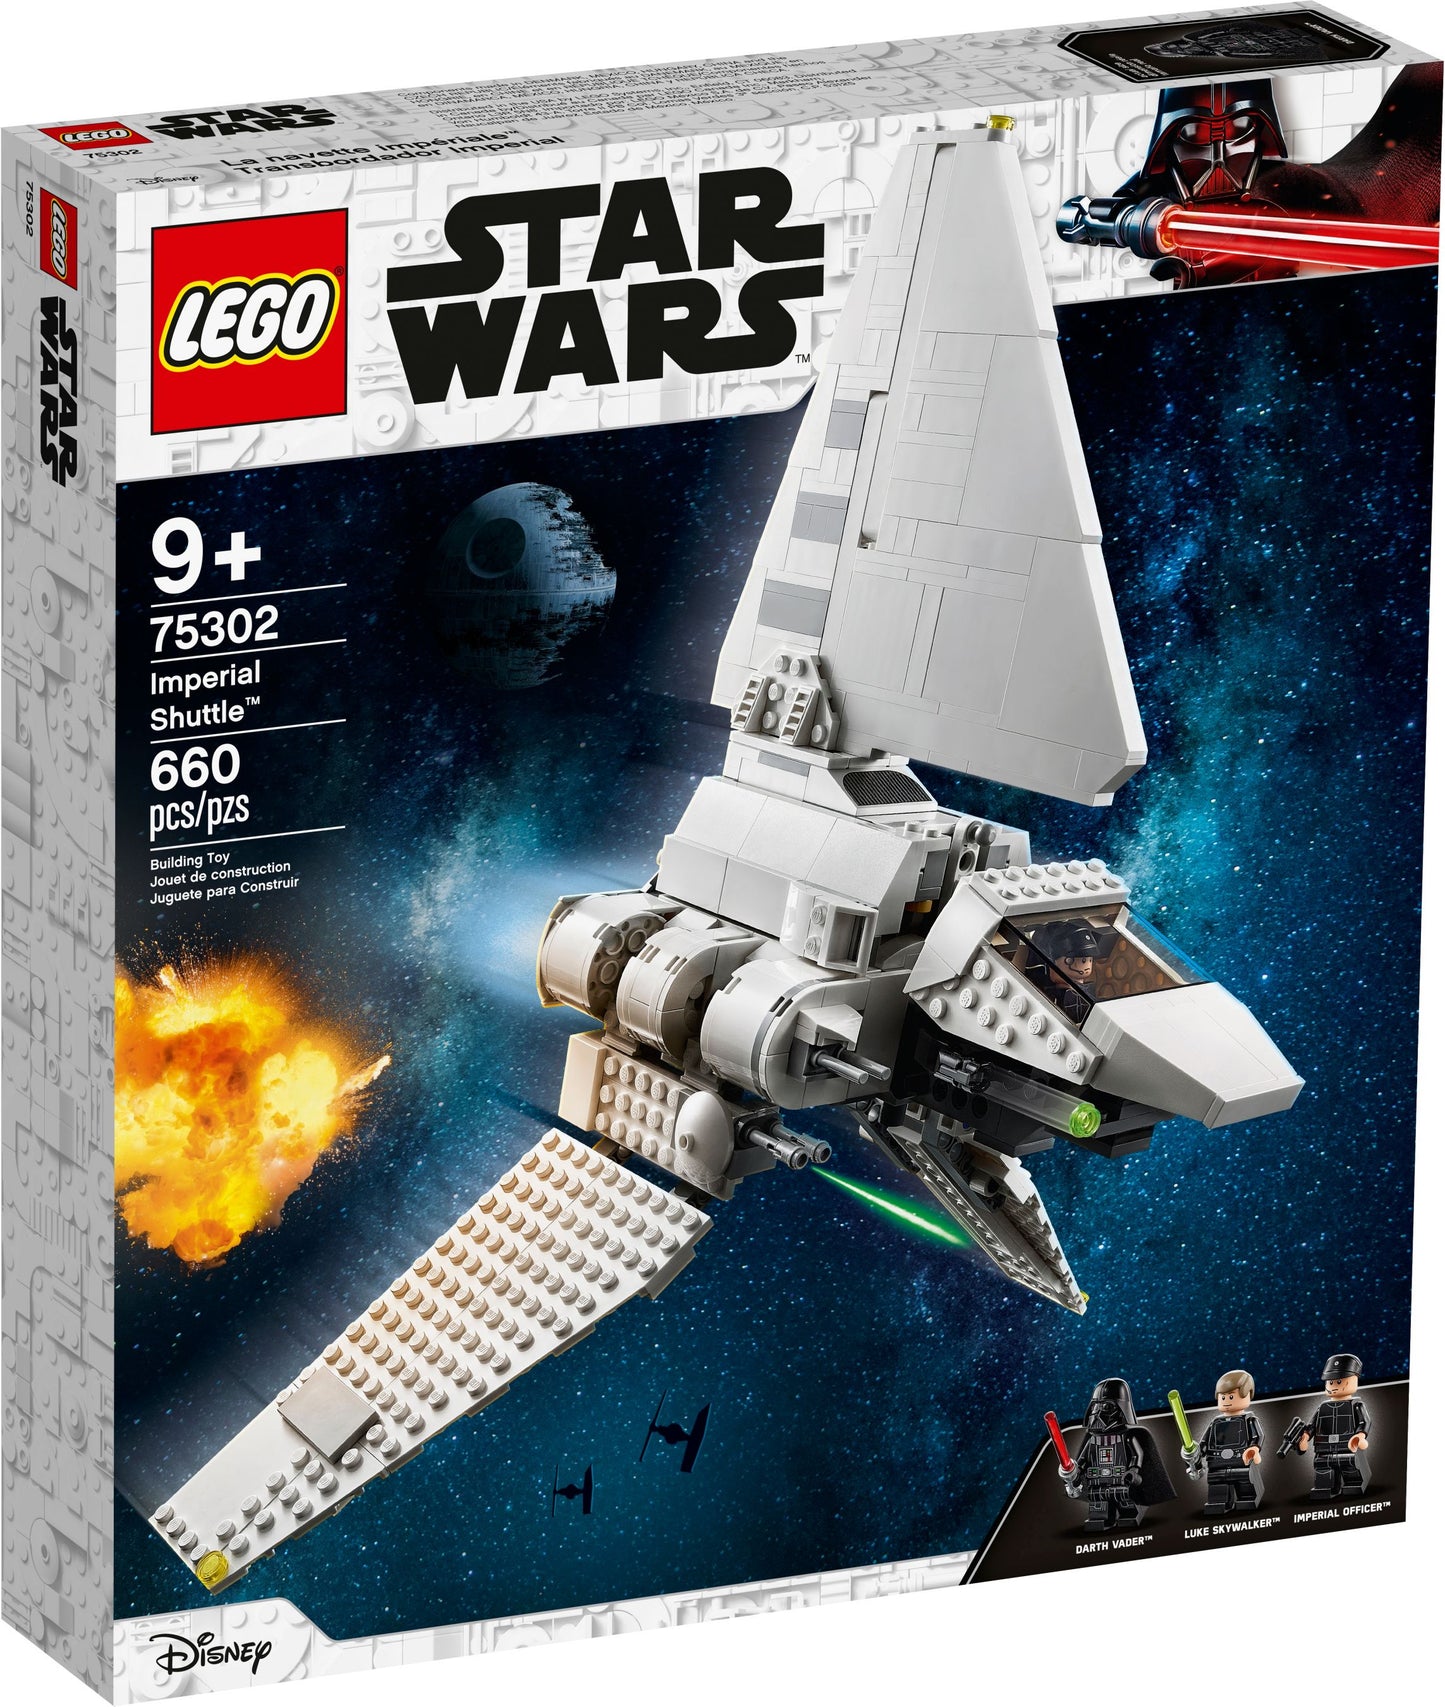 Star Wars 75302 Imperial Shuttle